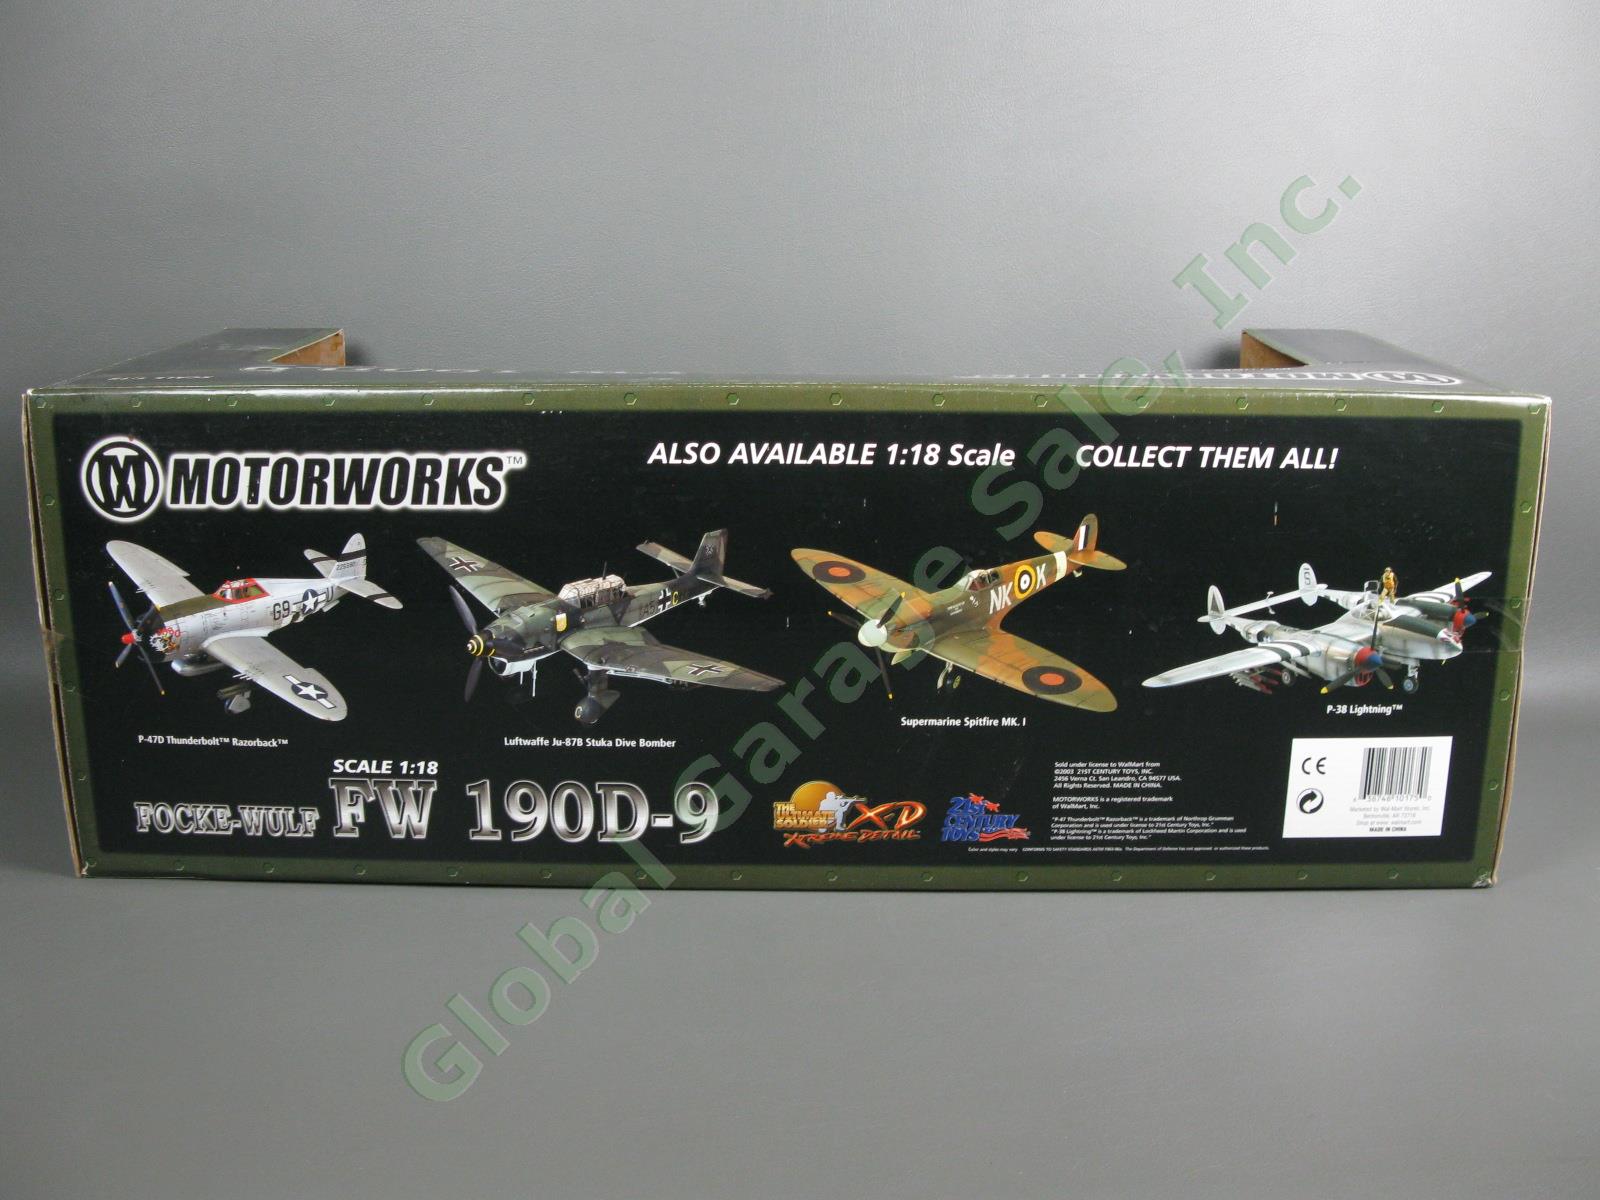 21st Century Toys Motorworks 1/18 WWII German Focke-Wulf FW 190D-9 Toy Plane NR 2